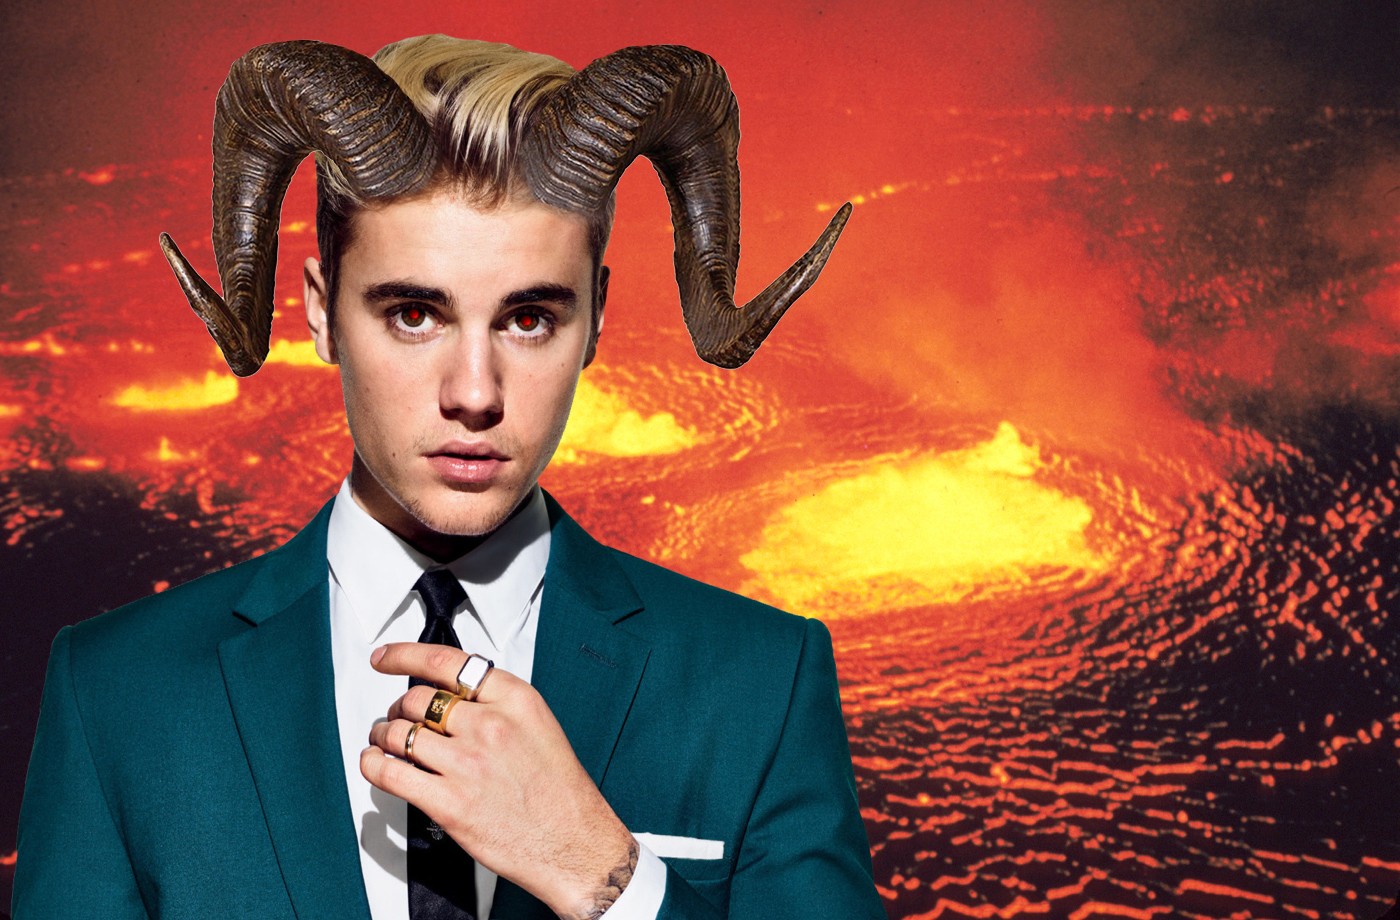 Justin-Bieber-Where-Are-You-Now-Devil-666